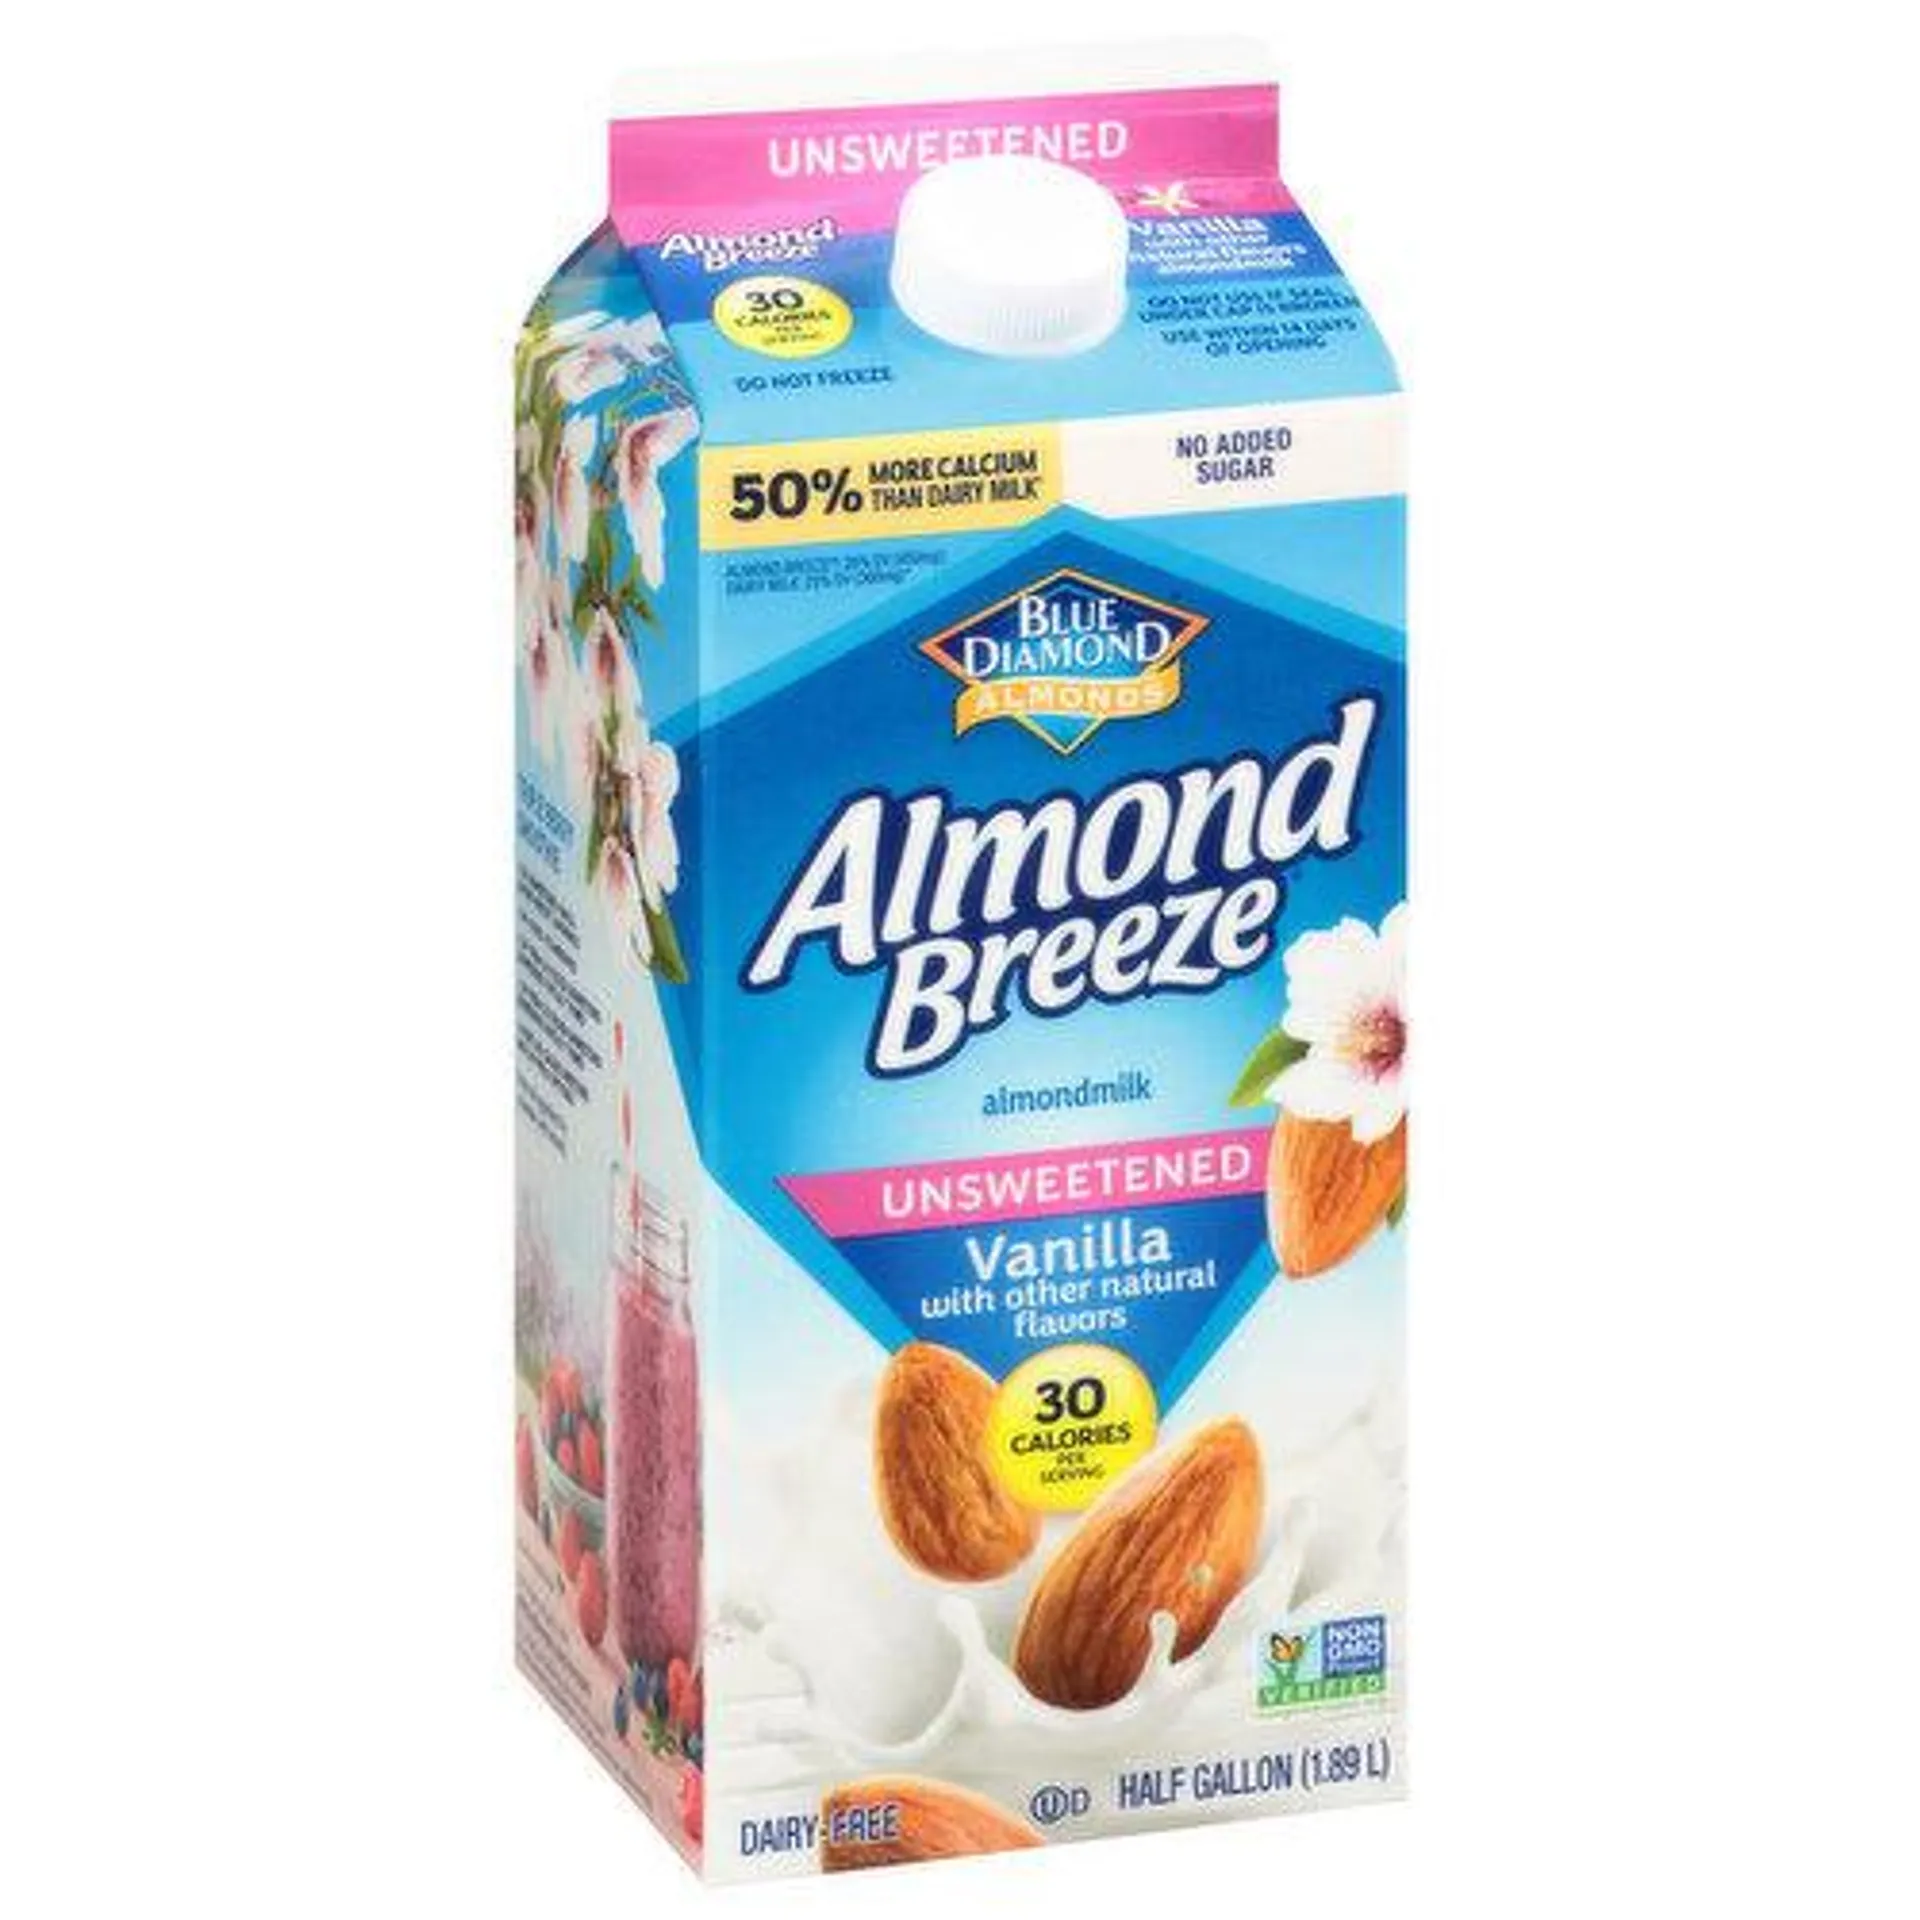 Almond Breeze Almondmilk, Unsweetened, Vanilla - 0.5 Gallon